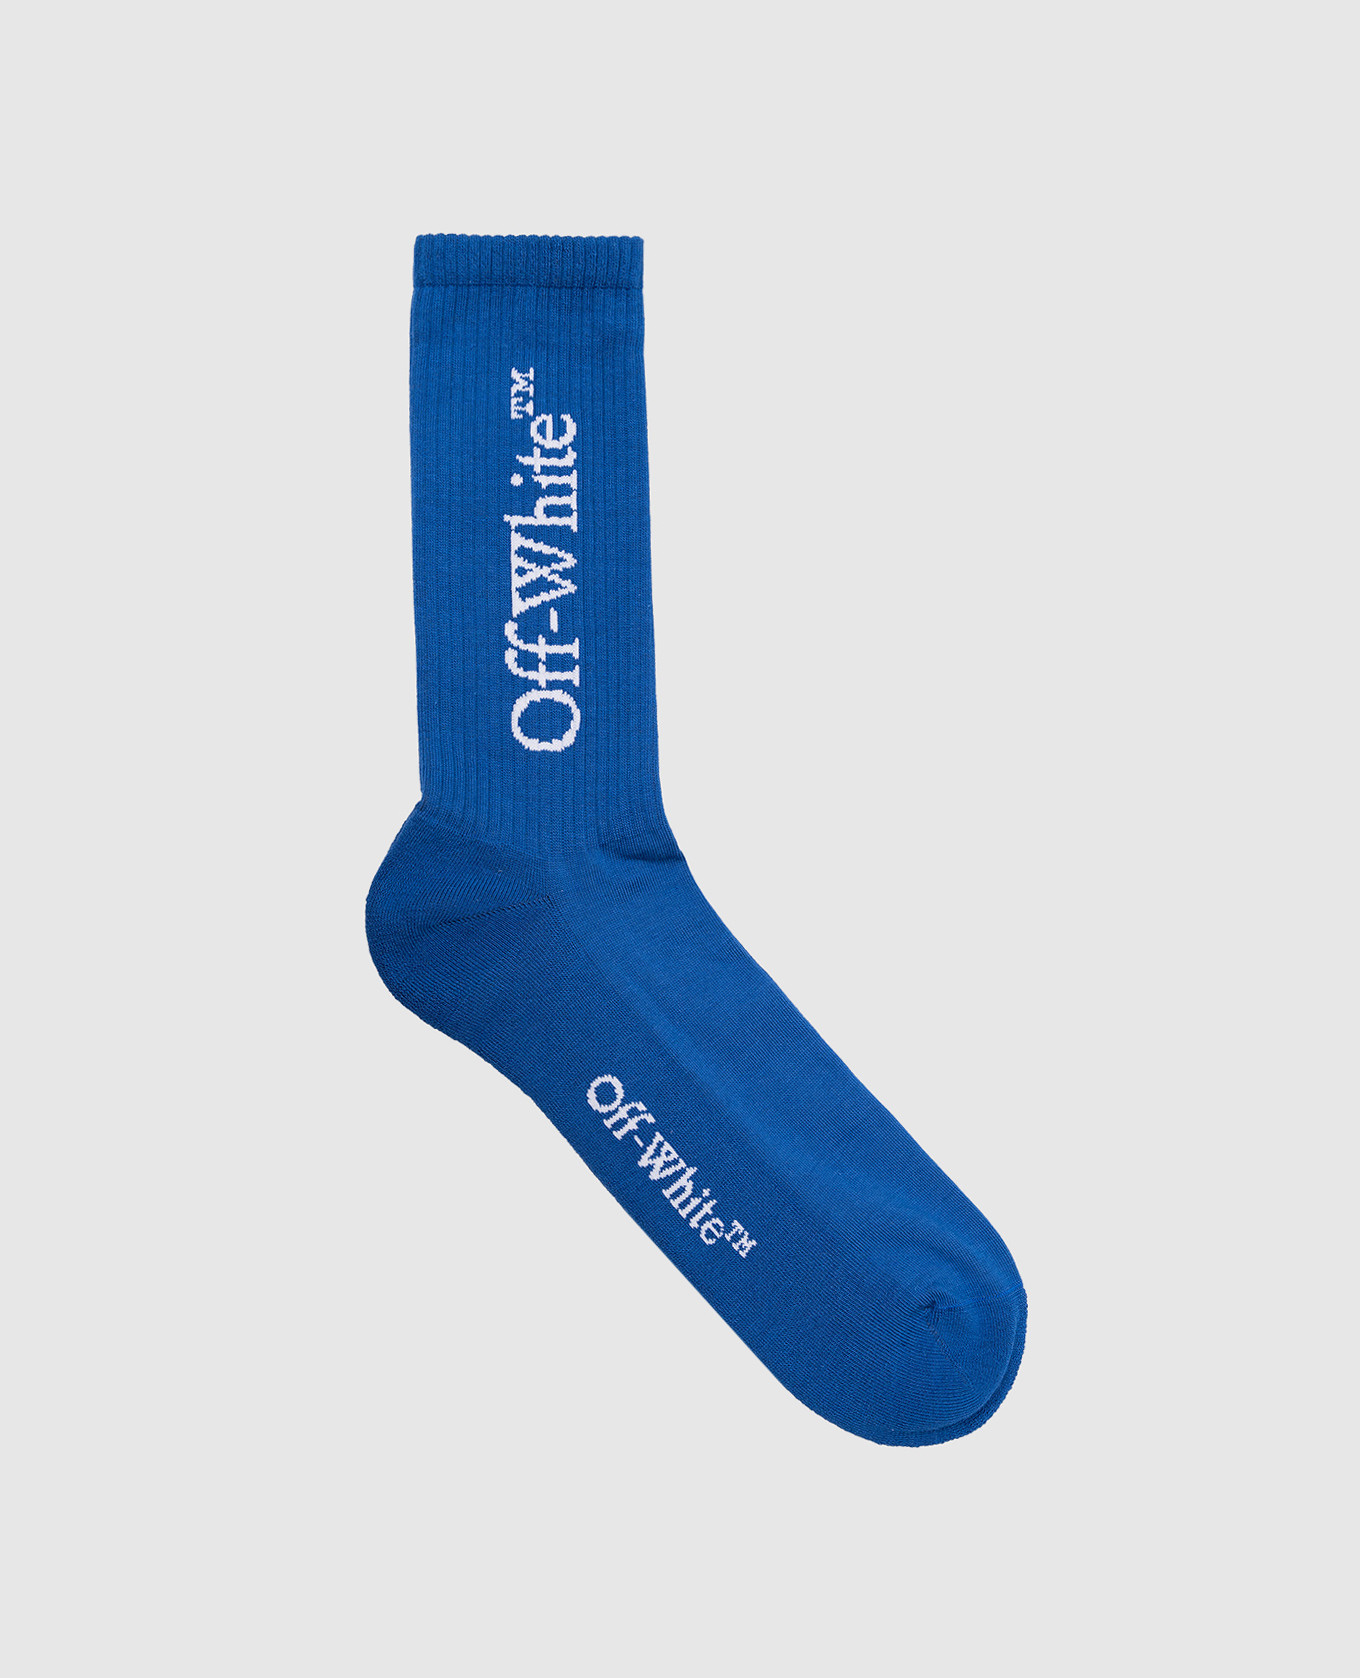 Blue socks with a logo pattern